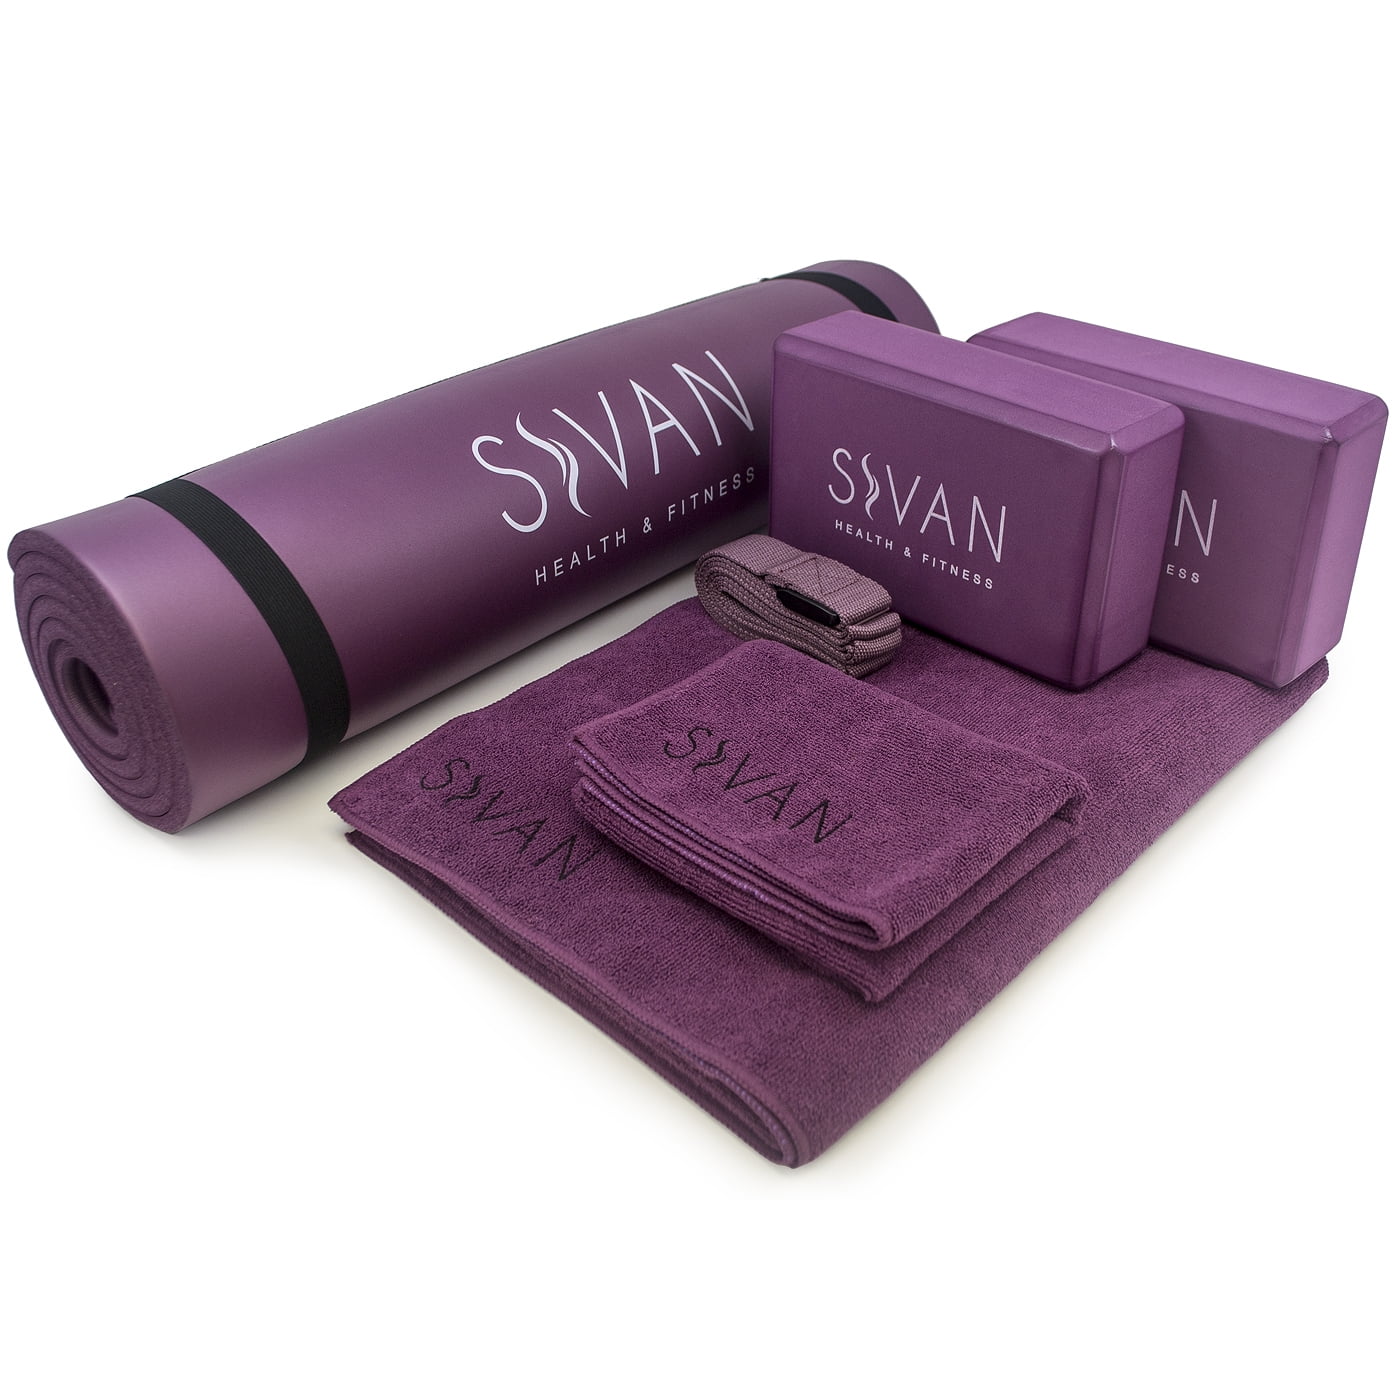 Sivan 6-Piece Yoga Set, Includes 1/2 Ultra Thick NBR Exercise Mat, 2 Yoga  Blocks, 1 Yoga Mat Towel, 1 Yoga Hand Towel and a Yoga Strap (Green) 